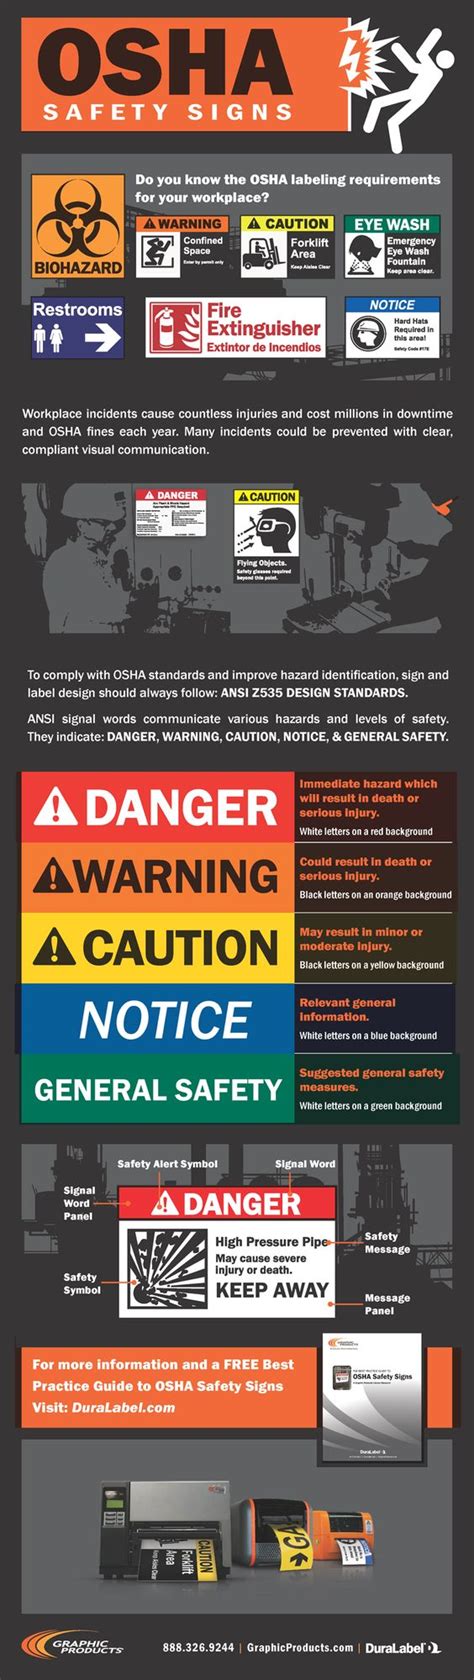 Osha Safety Signs Office Safety Workplace Safety Work Safety Safety